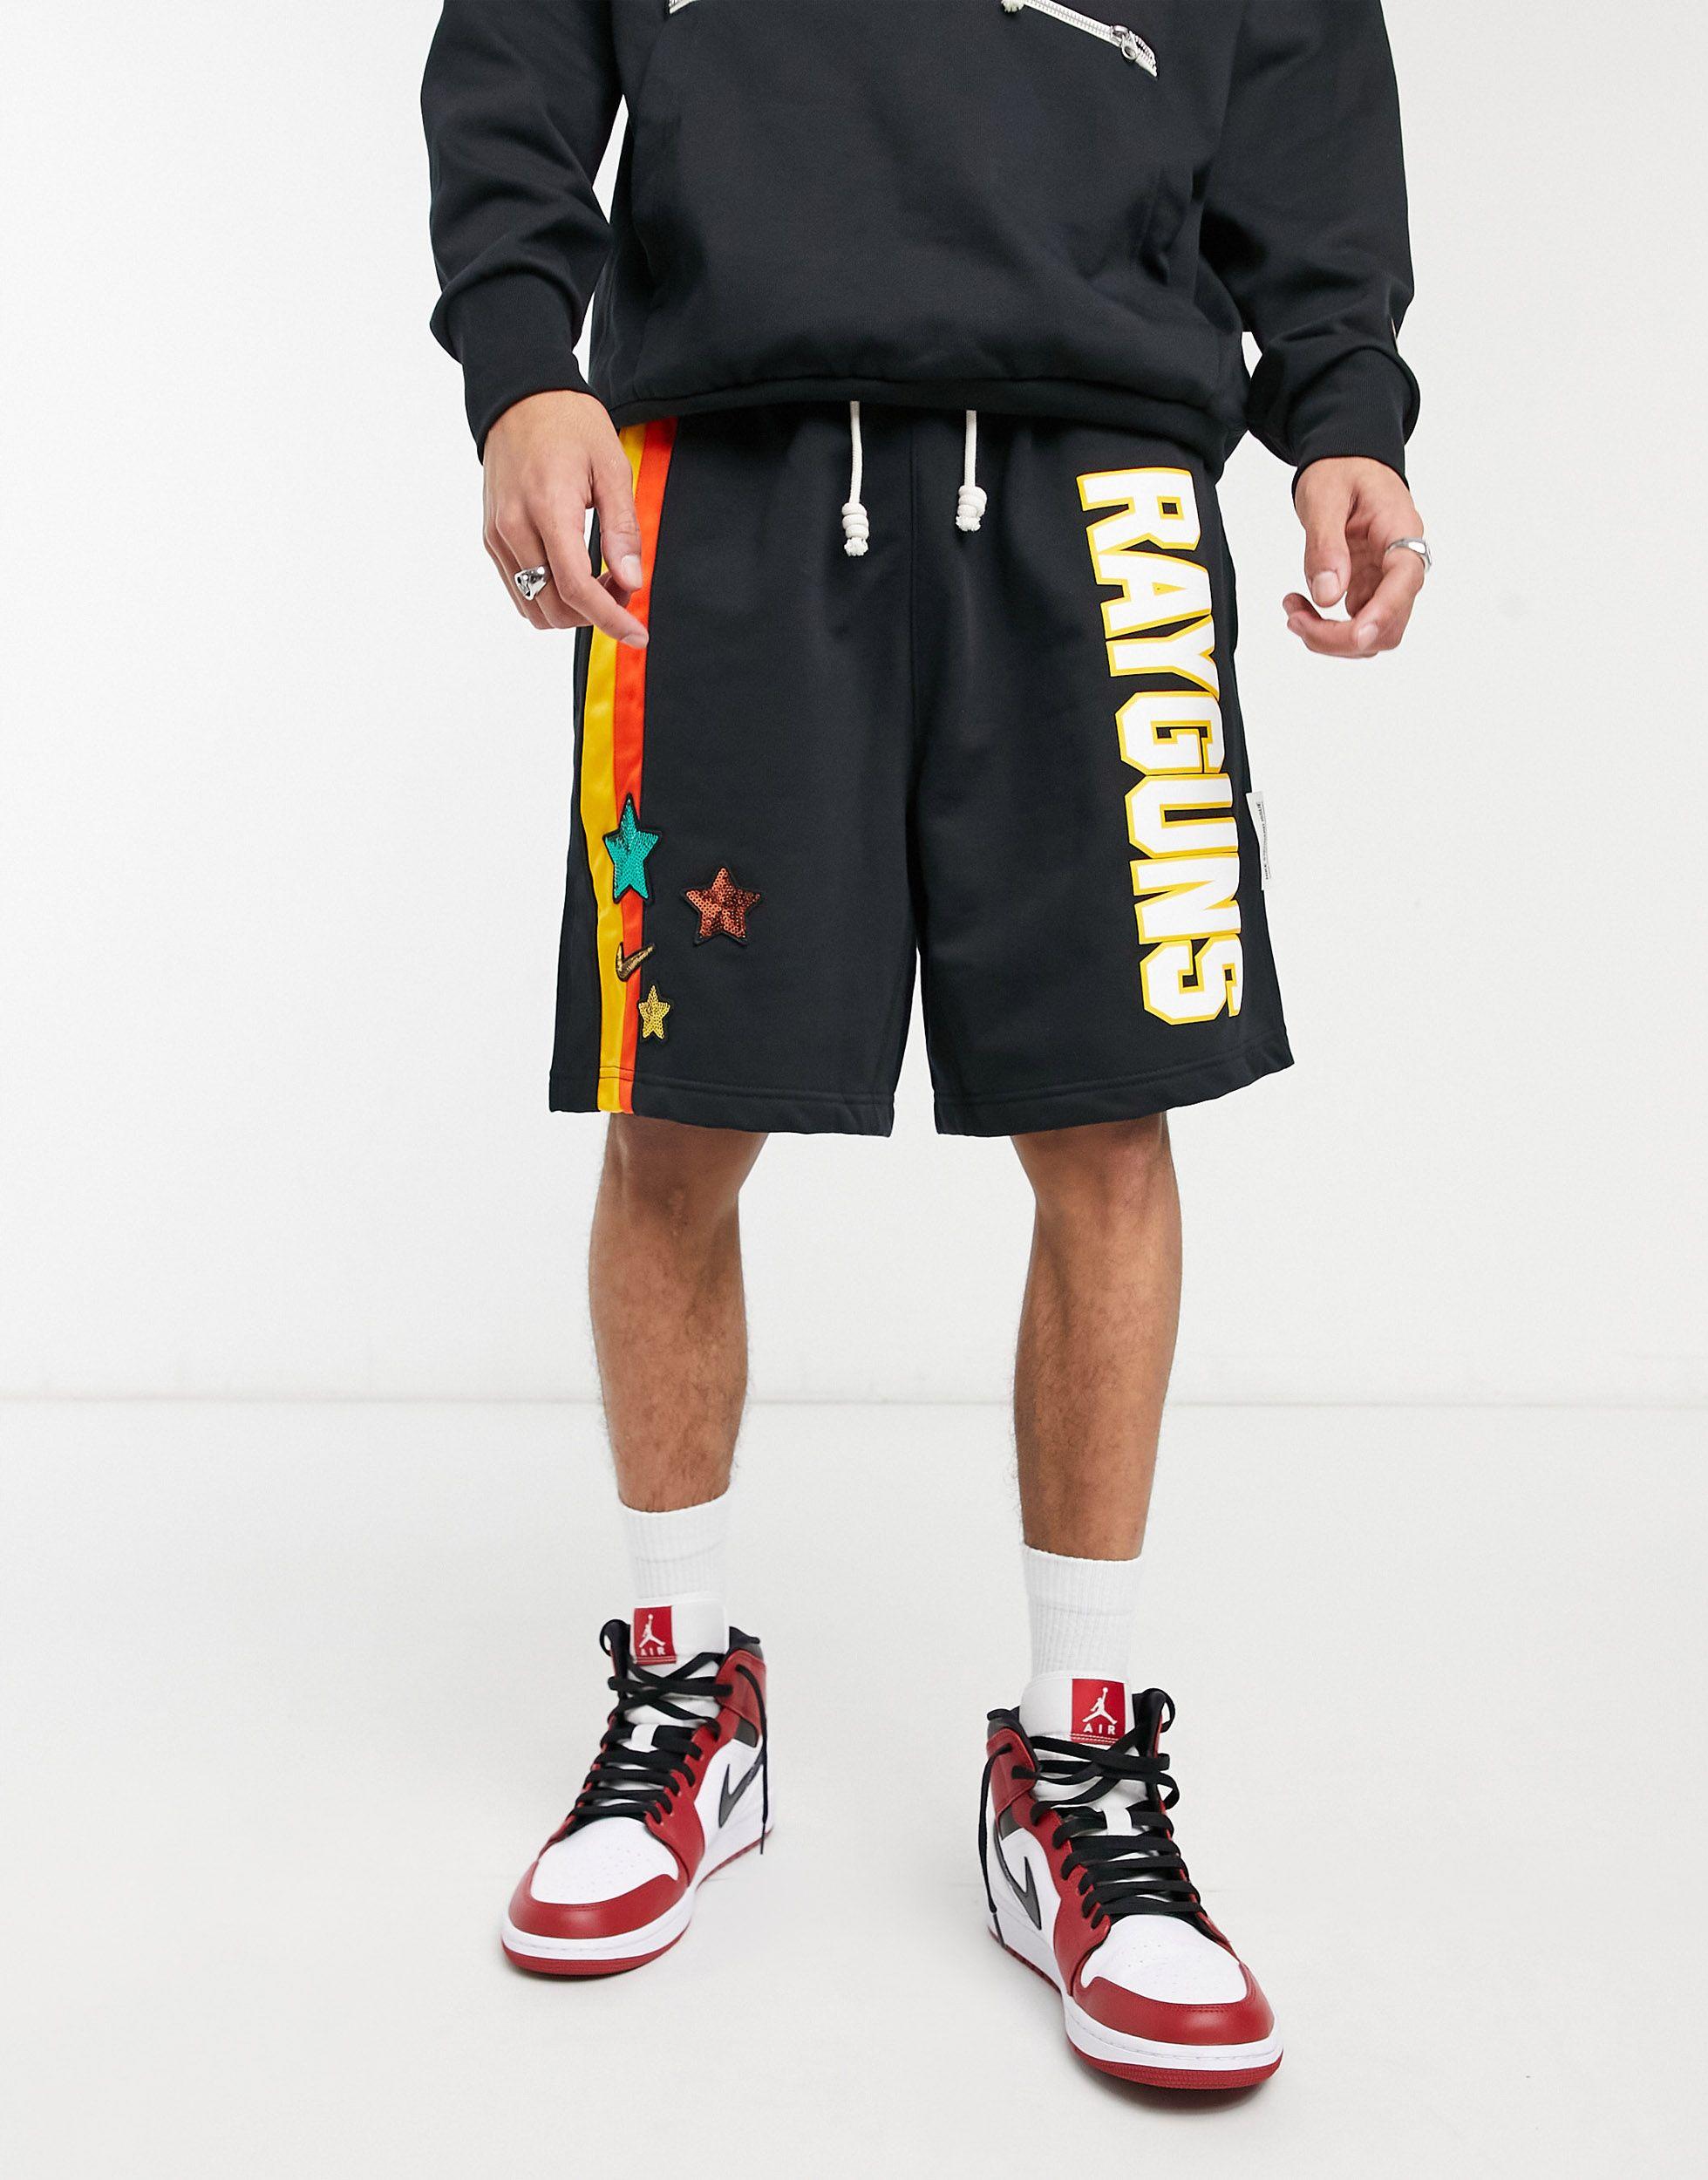 Nike Basketball Raygun Shorts in Black 